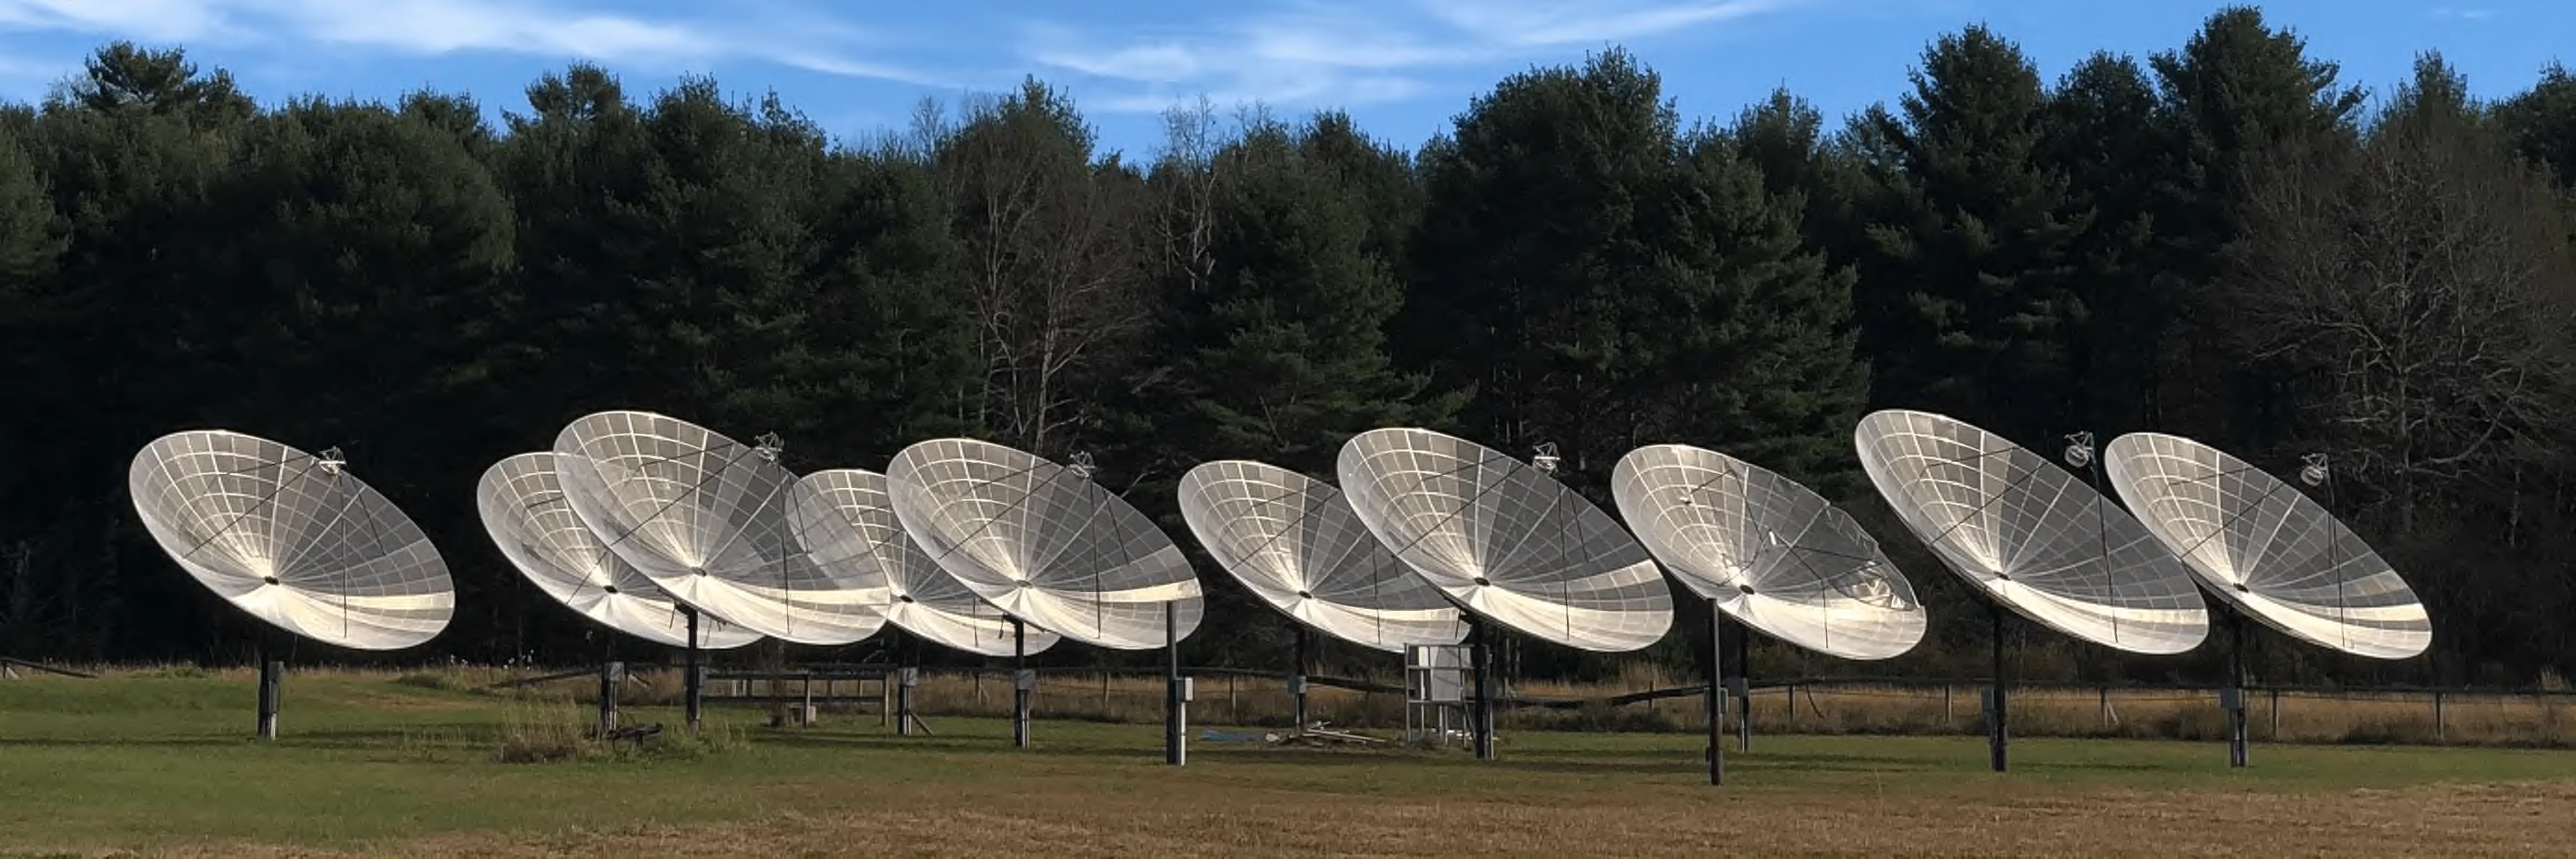 TONE: Array of radio telescope dishes